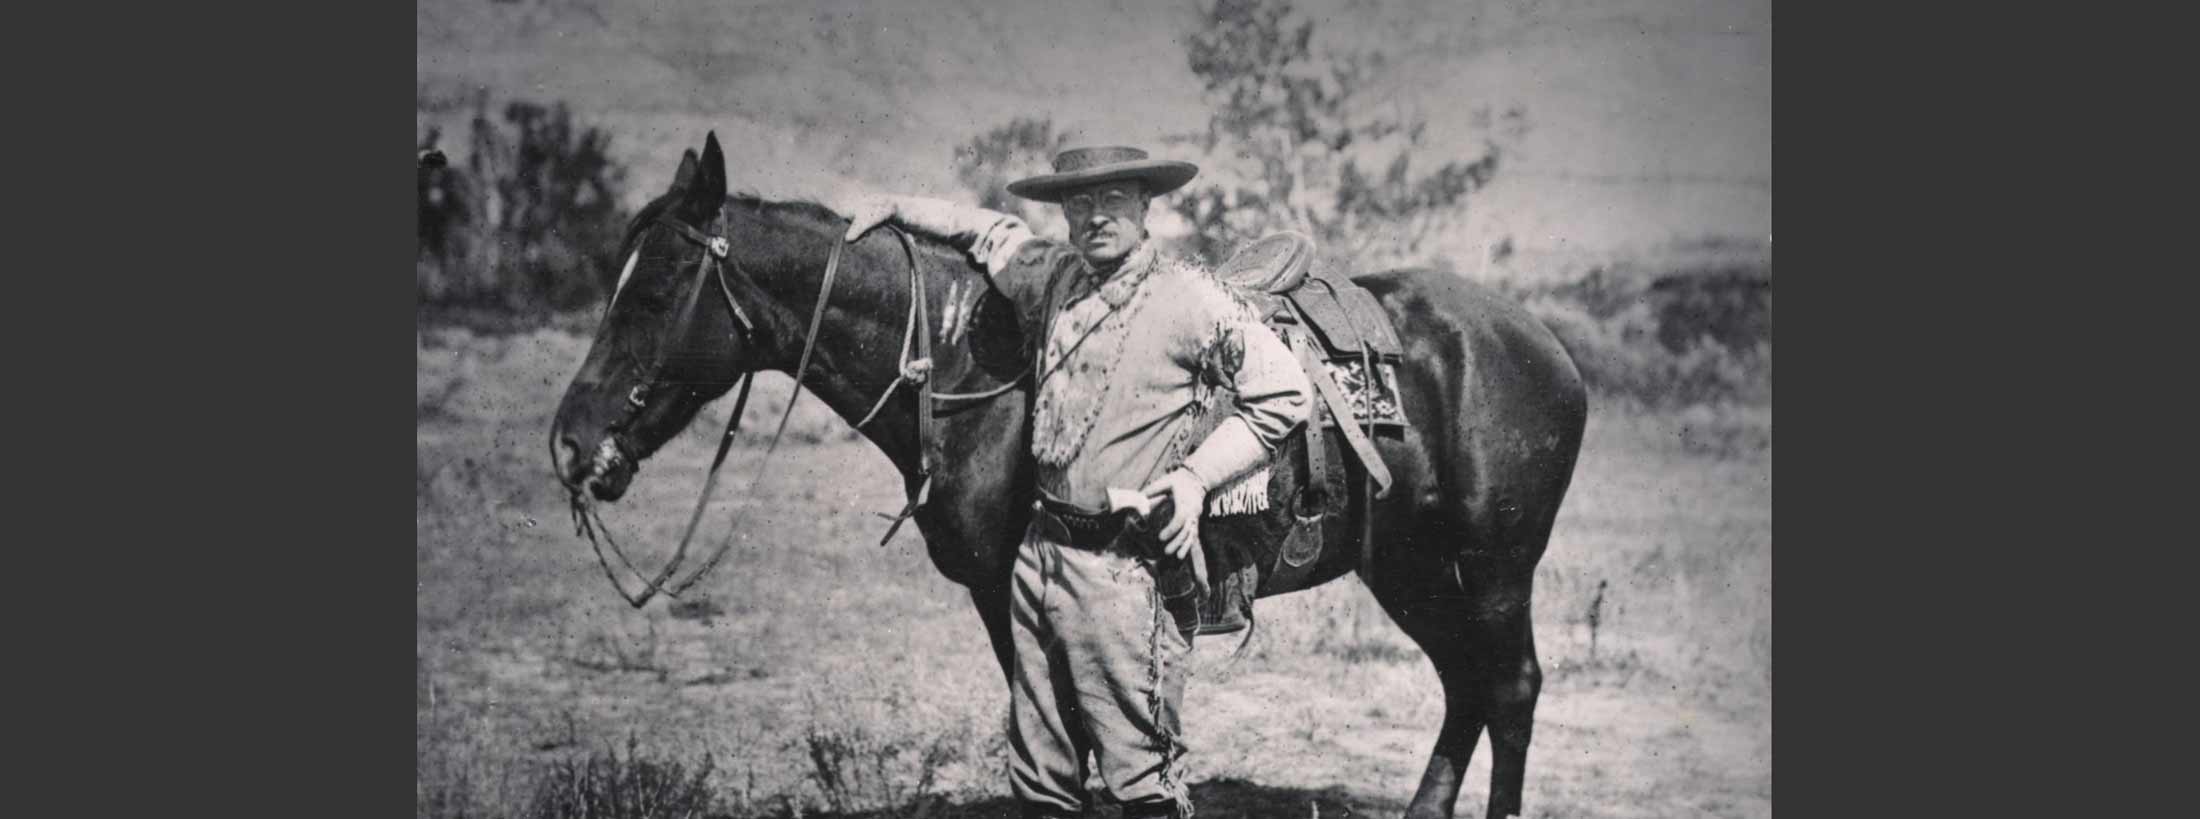 Teddy Roosevelt’s Travels across Southeast Montana